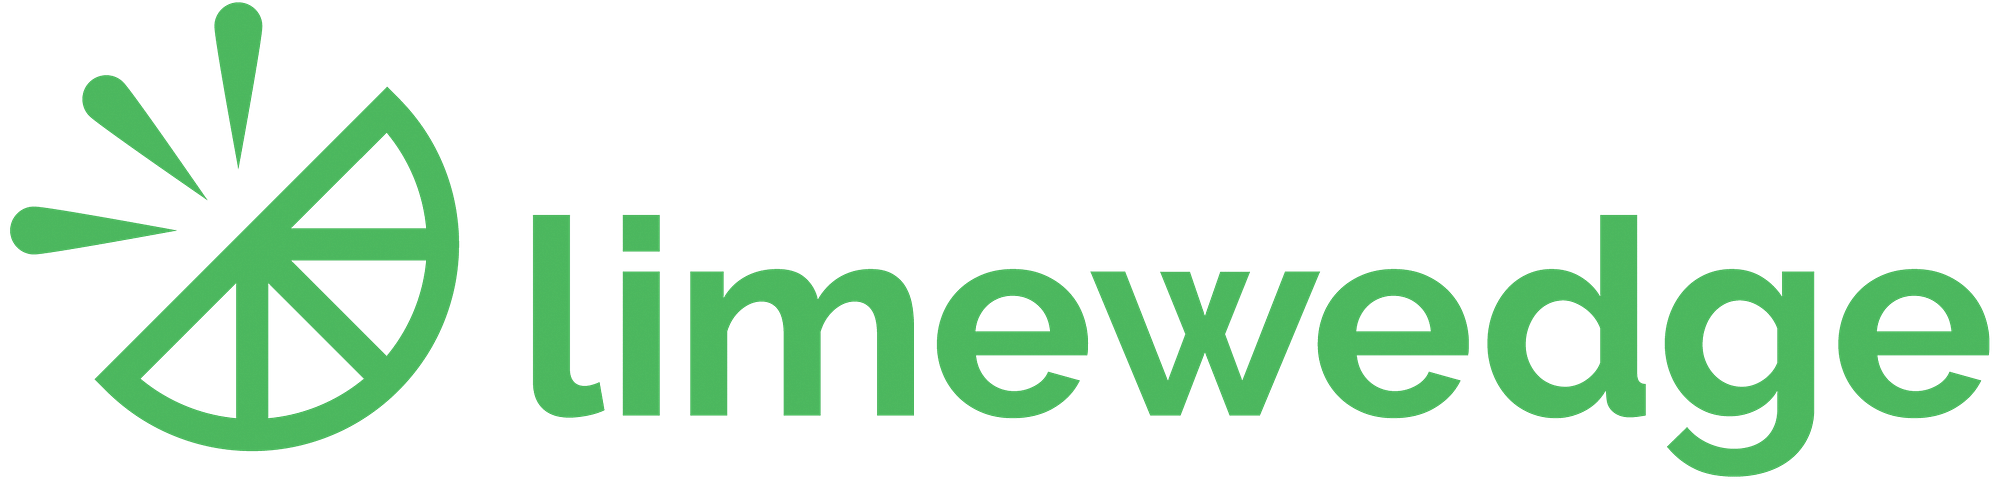 Limewedge logo